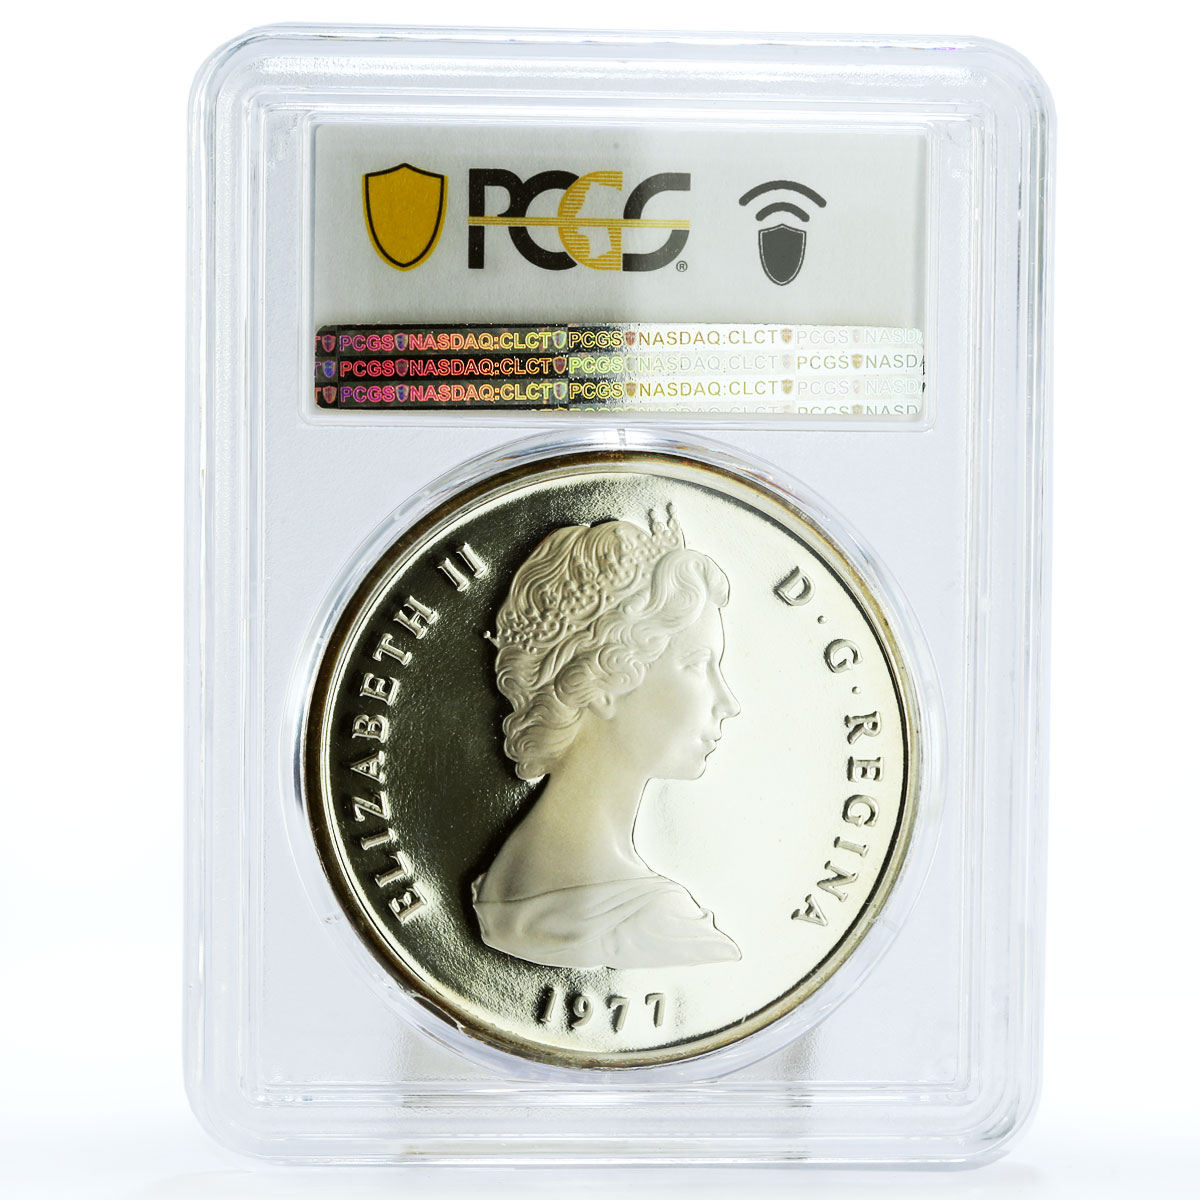 Turks and Caicos Islands 20 crowns Queen Victoria PR68 PCGS silver coin 1977